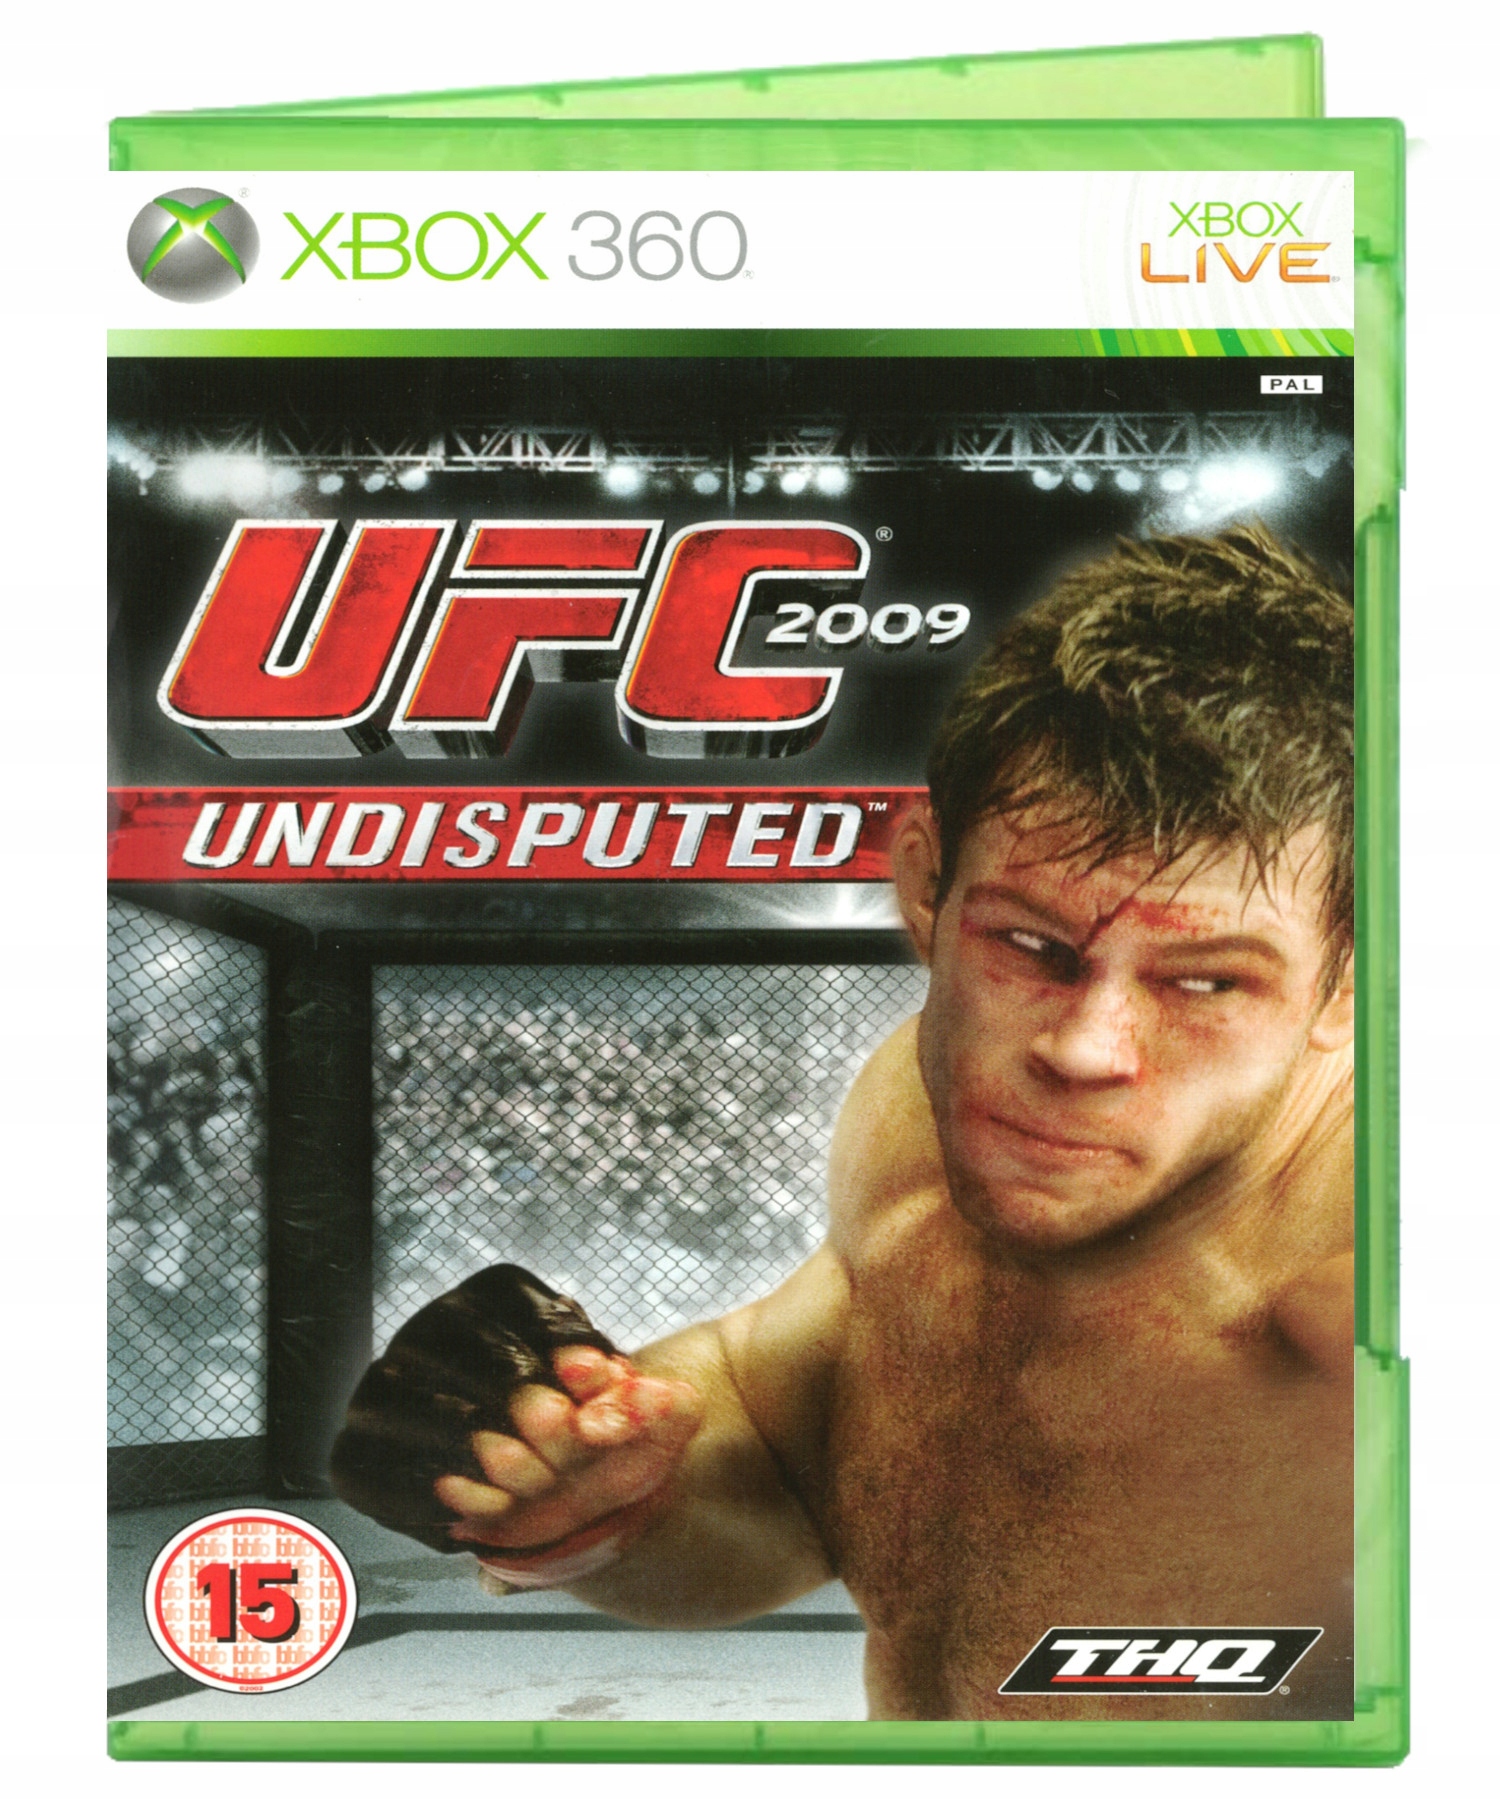 XBOX 360 UFC 2009 UNDISPUTED